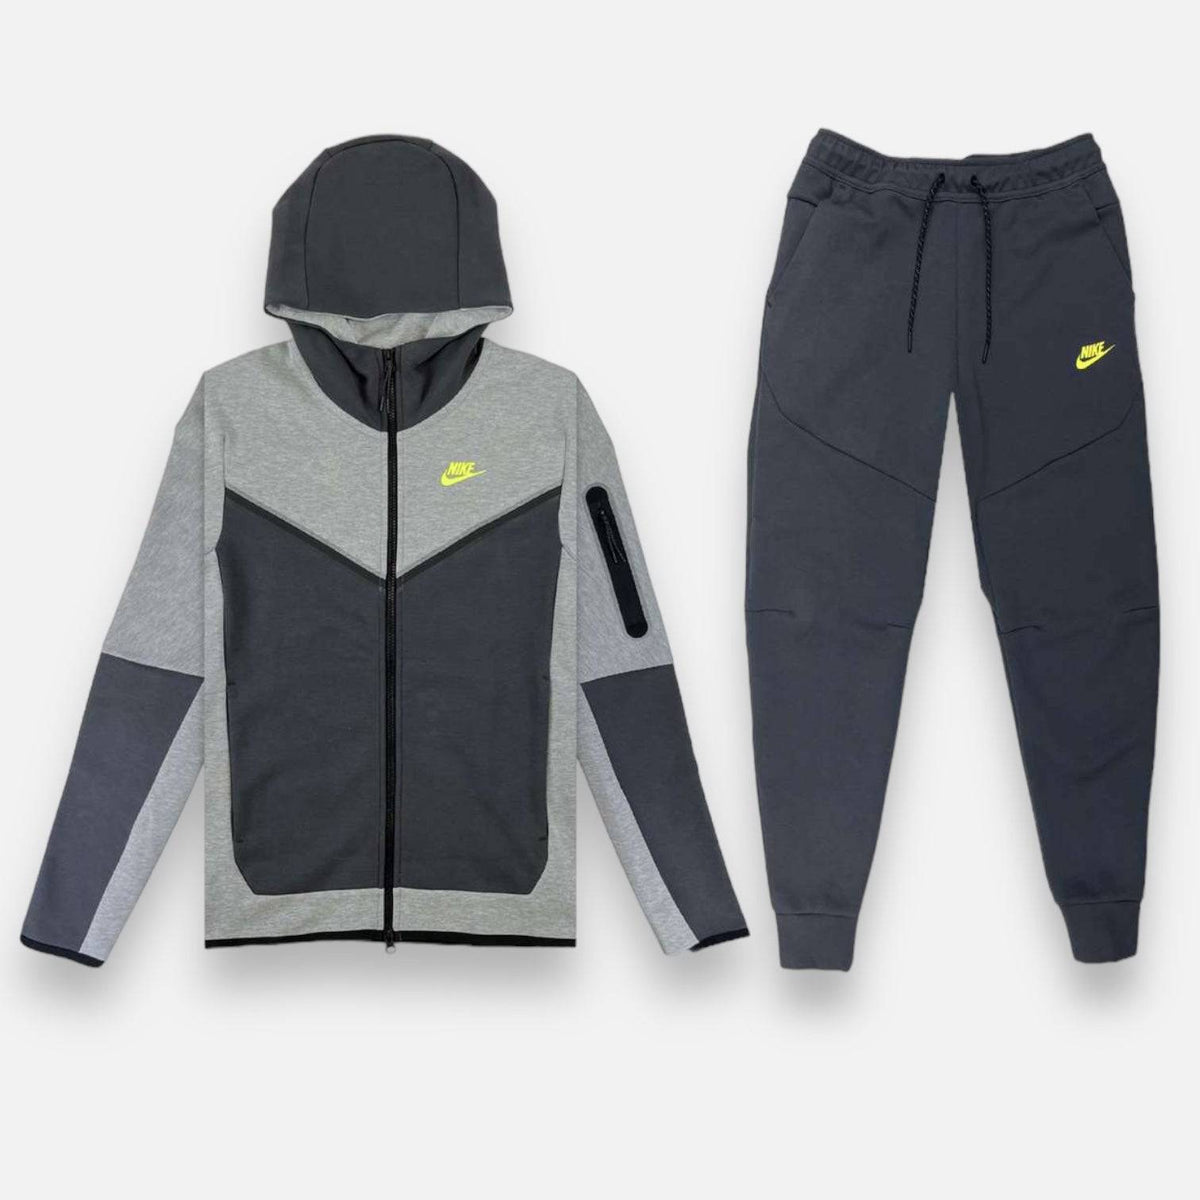 Nike Tech Fleece Set - Grey, Anthracite & Volt (3rd Gen) - No Sauce The Plug